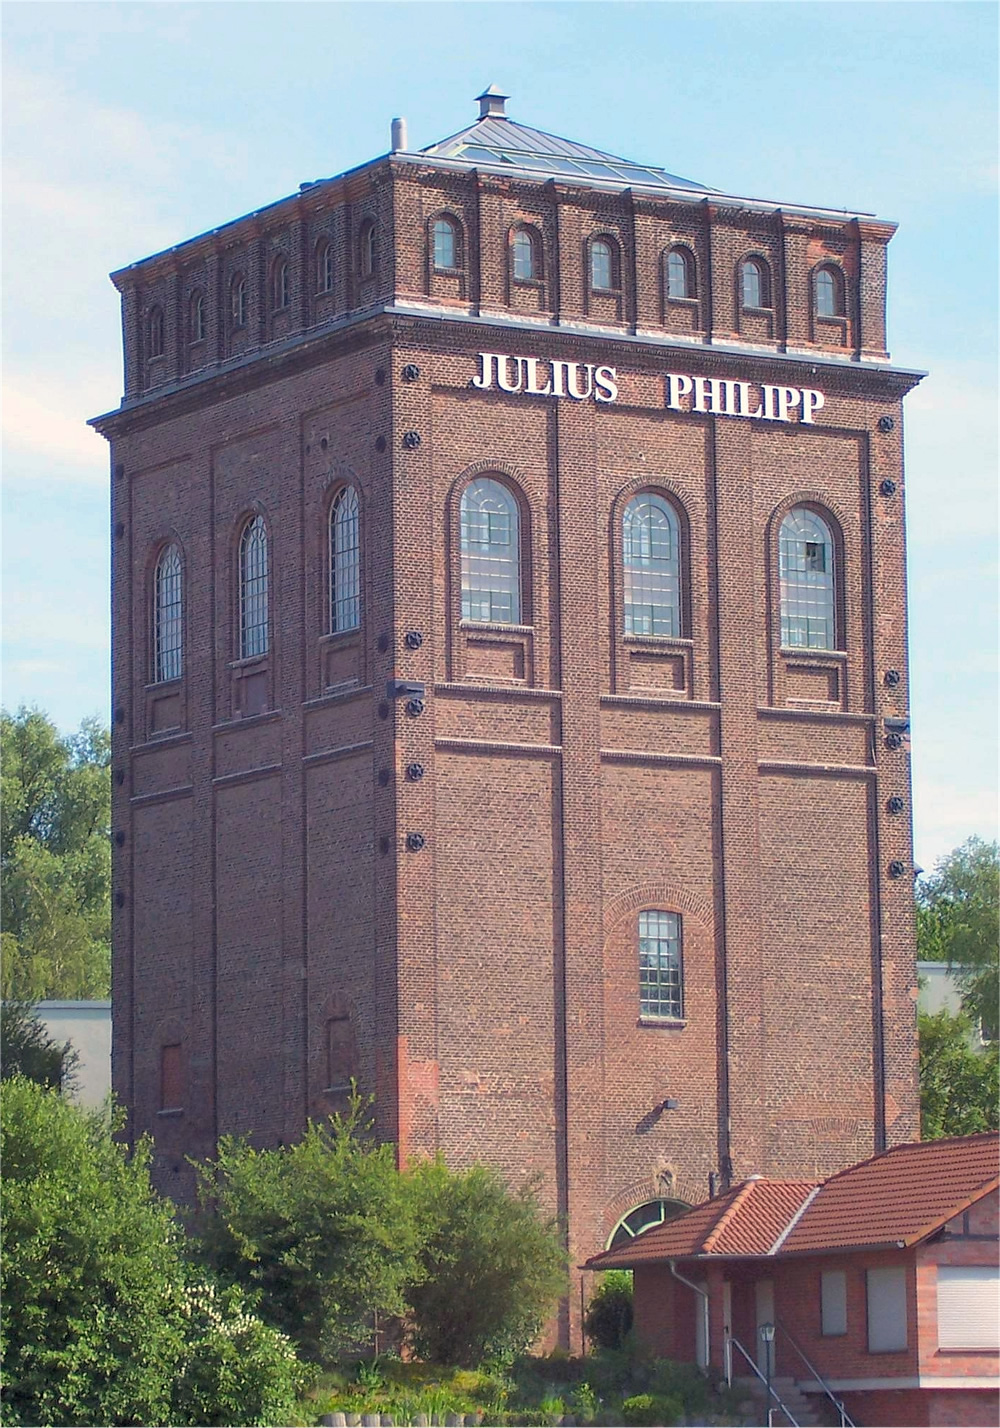 Malokow-Turm der Zeche Julius-Philipp, Bochum (Quelle: Wikipedia, gemeinfrei)